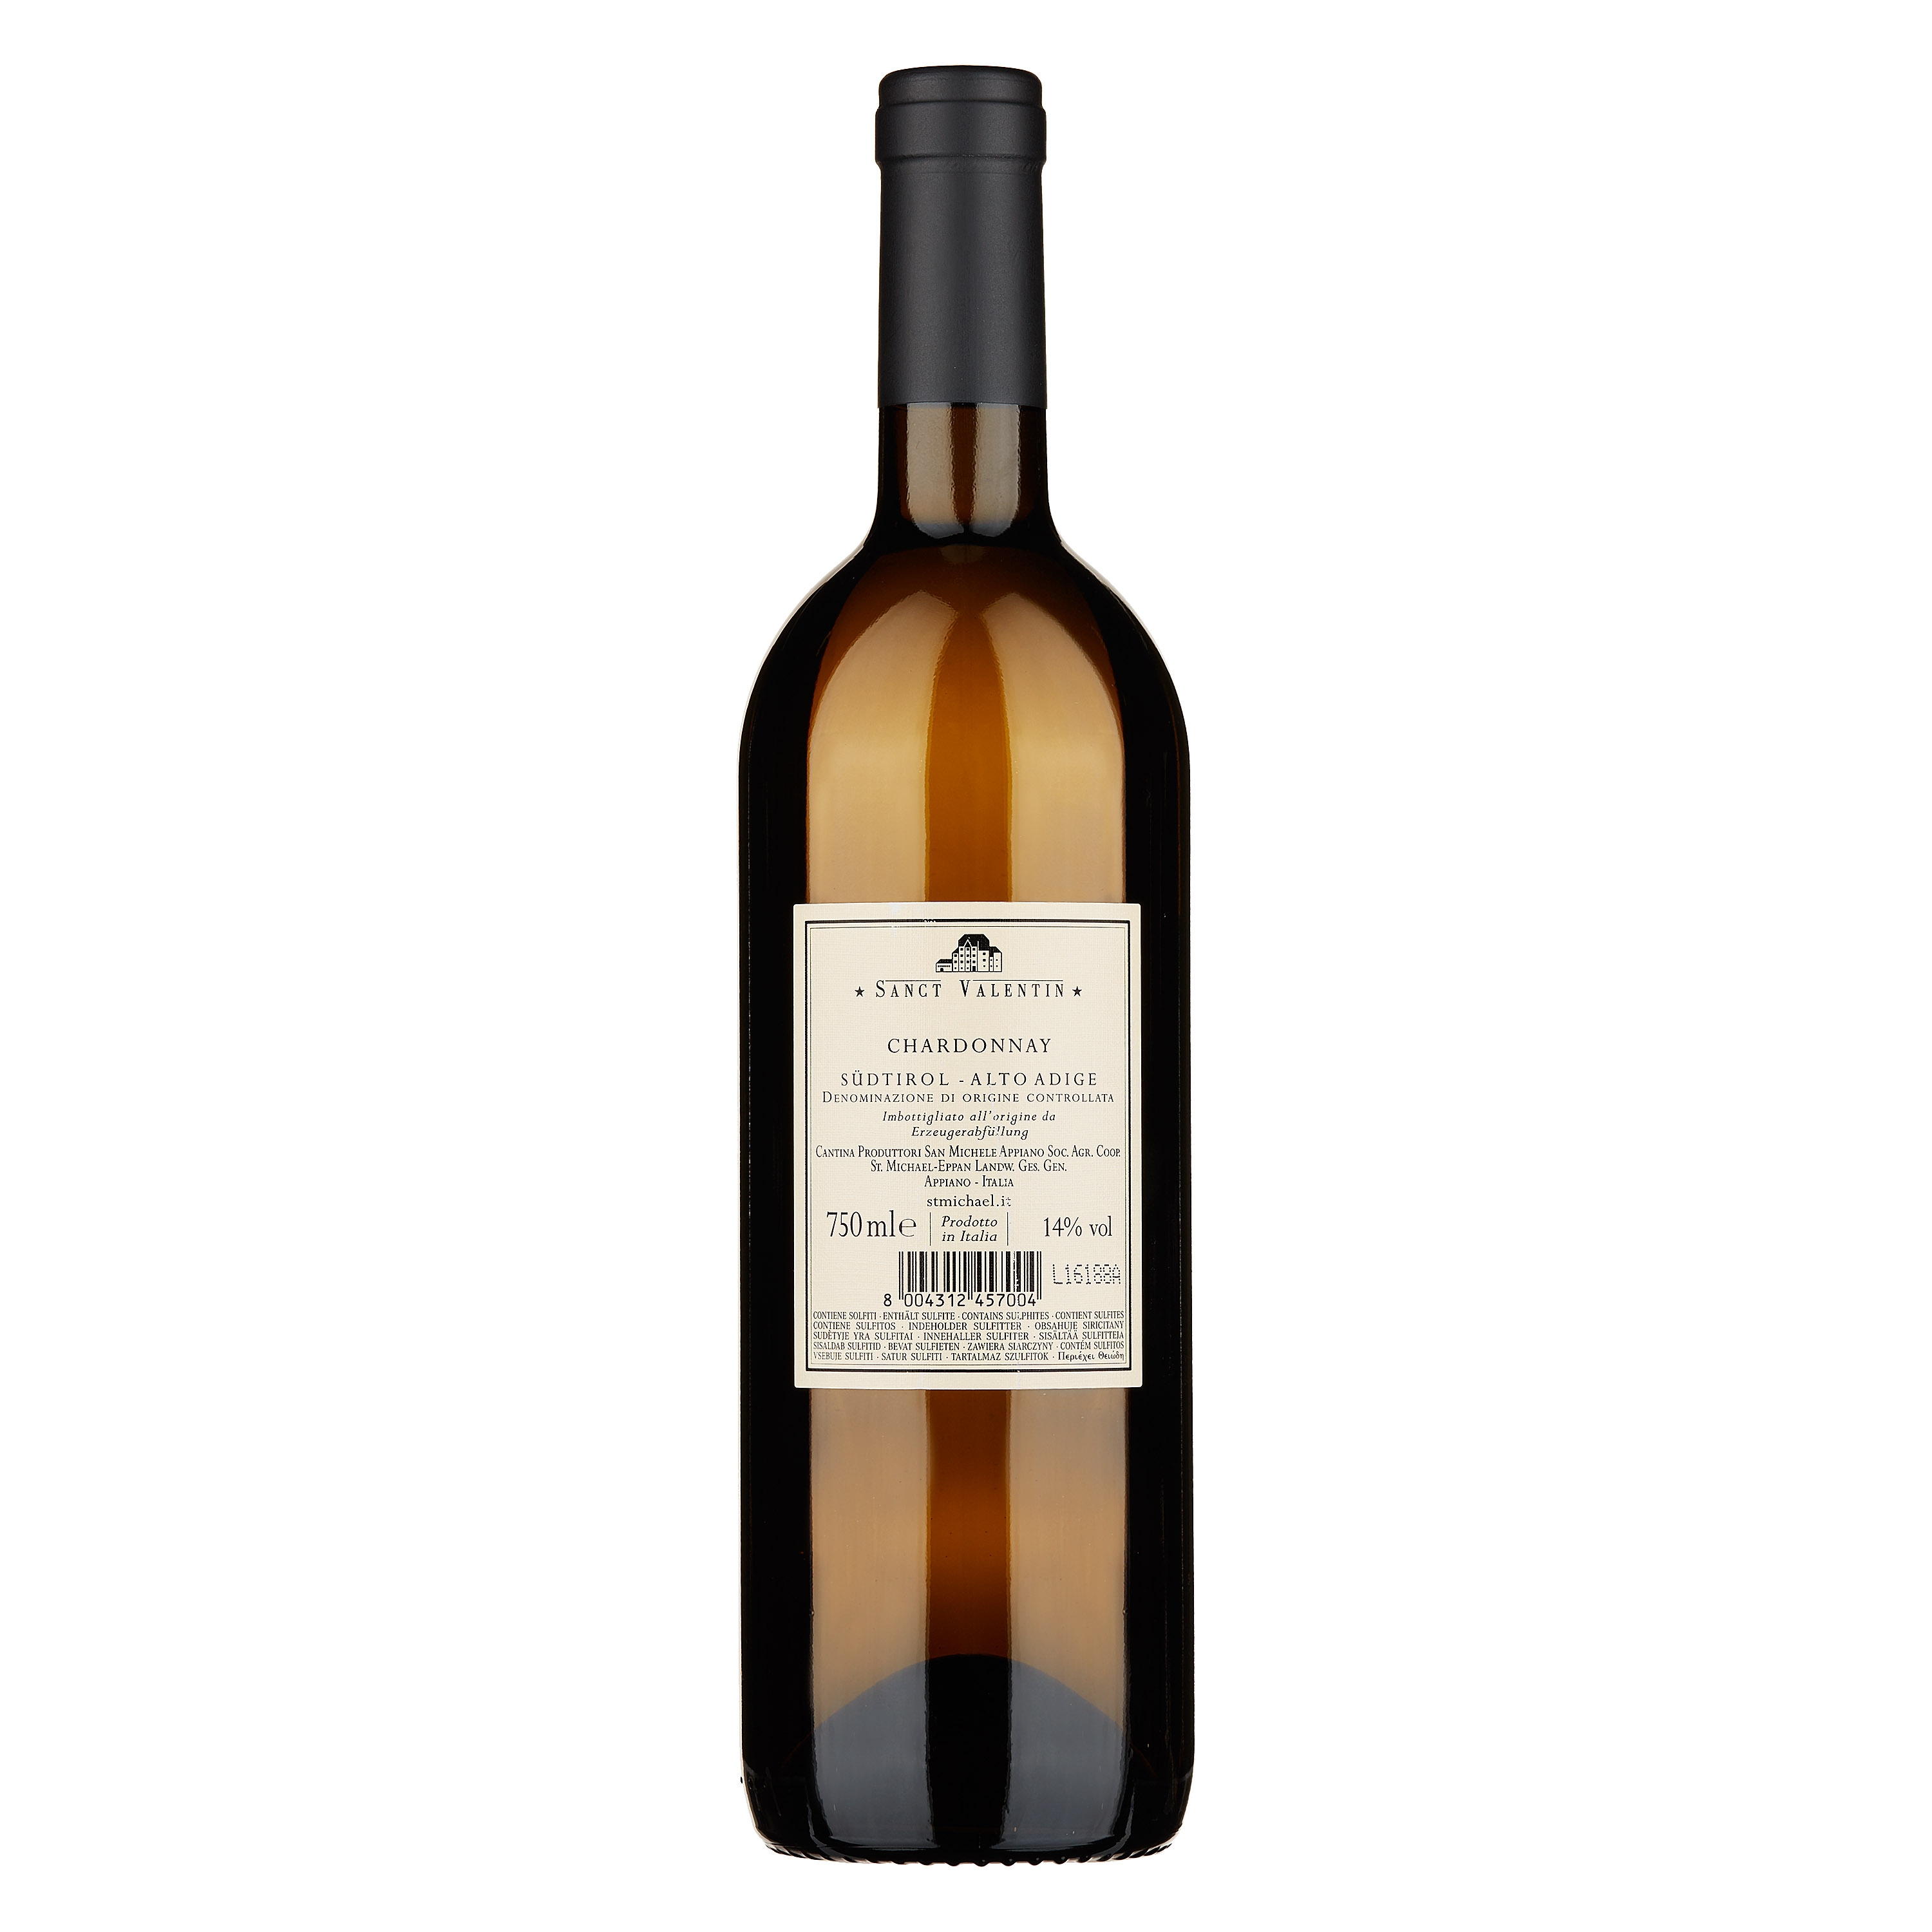 Alto Adige Chardonnay DOC “Sanct Valentin” 2014 - San Michele Appiano